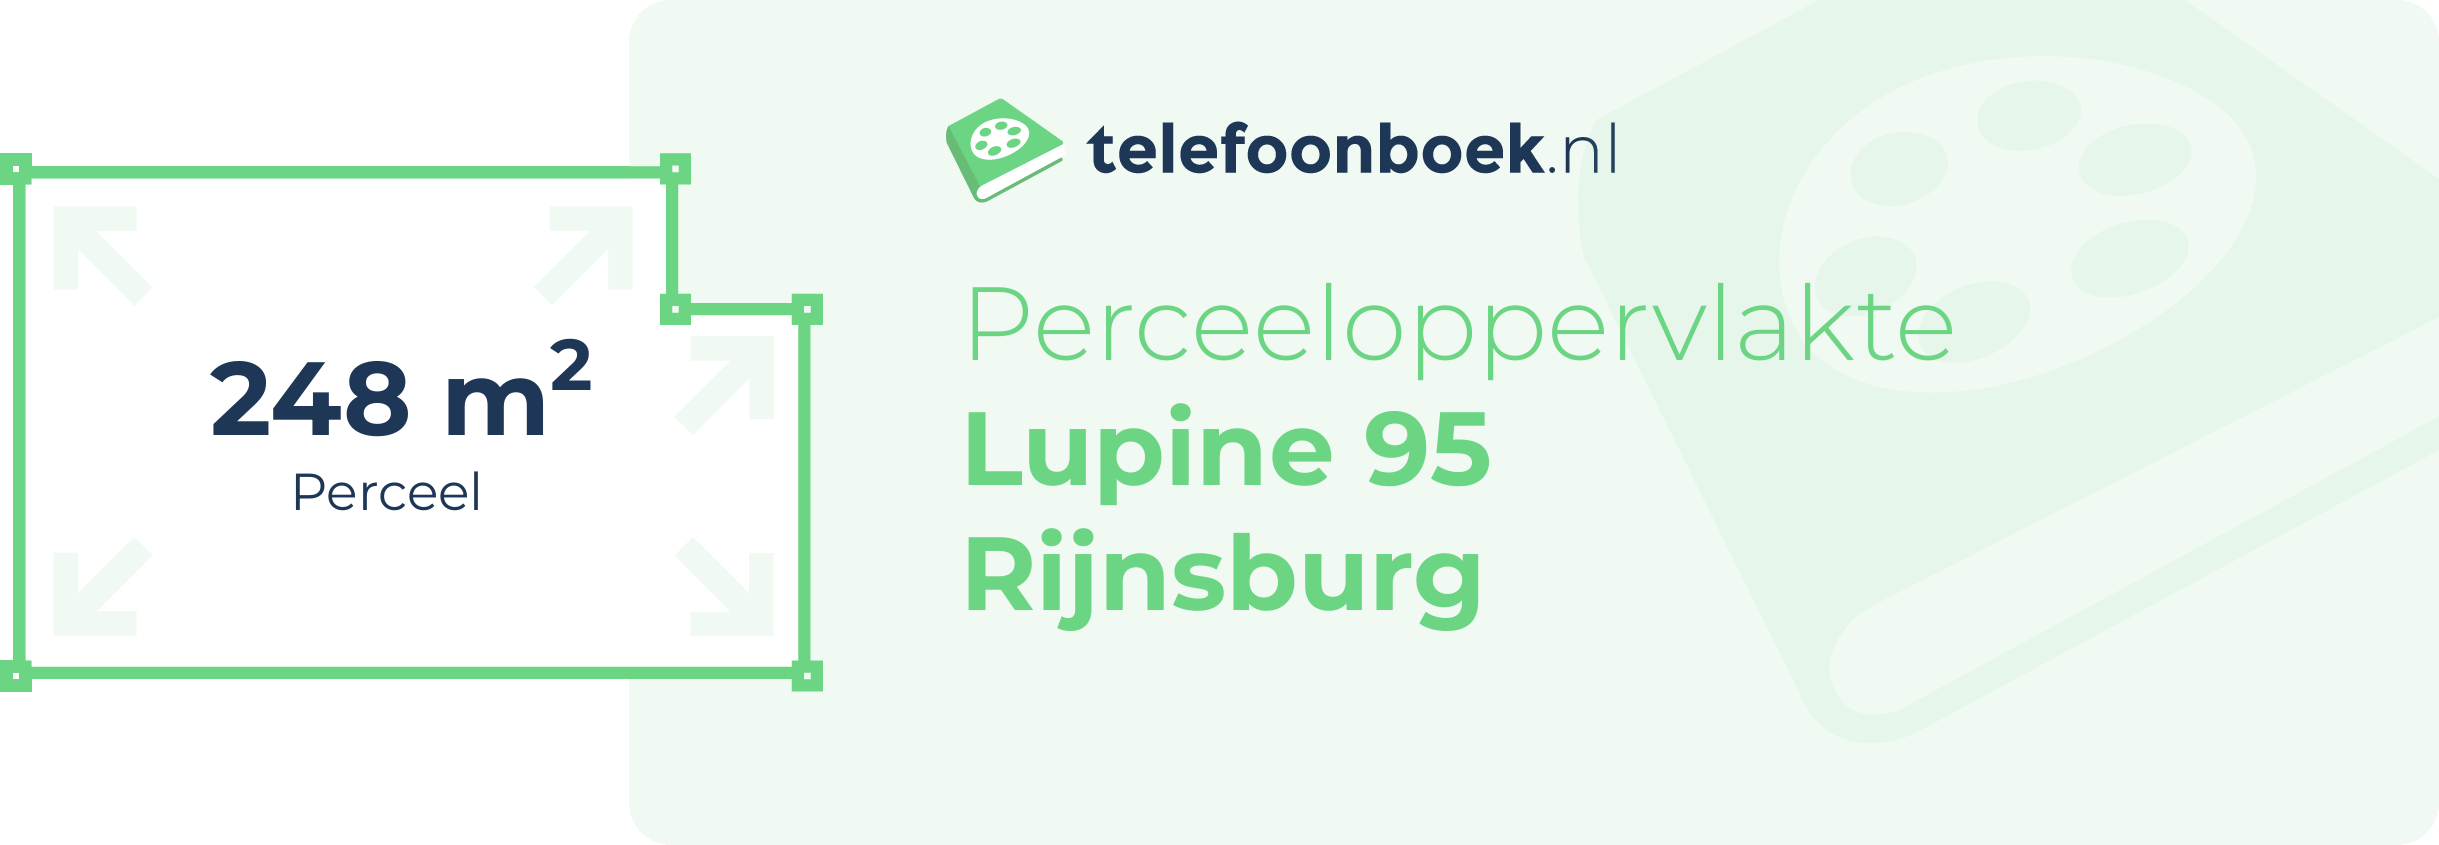 Perceeloppervlakte Lupine 95 Rijnsburg